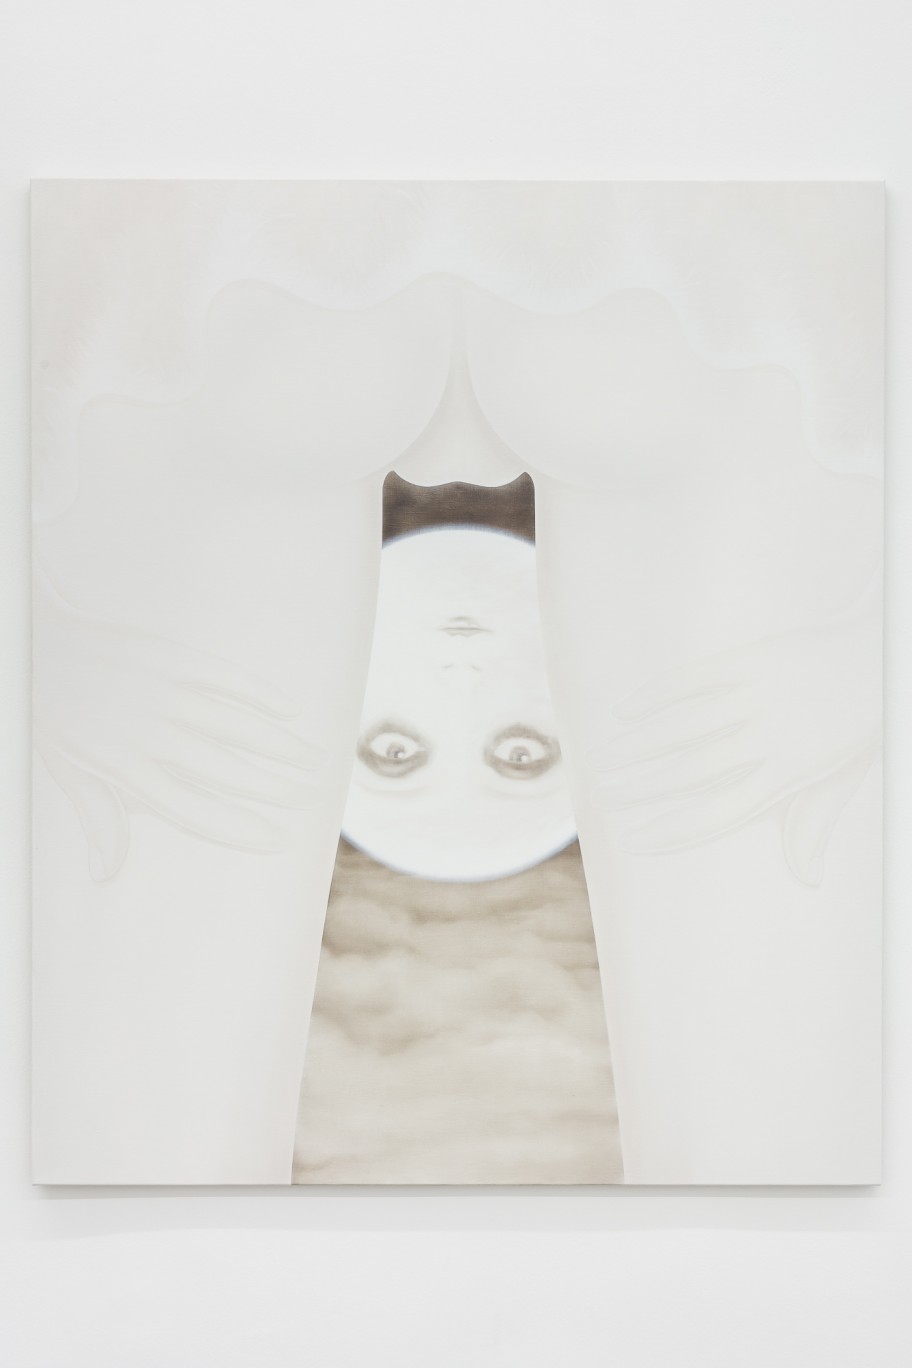 Melanie Ebenhoch tschüss - bye bye, 2020 Öl auf Leinwand 150 x 127 cm 